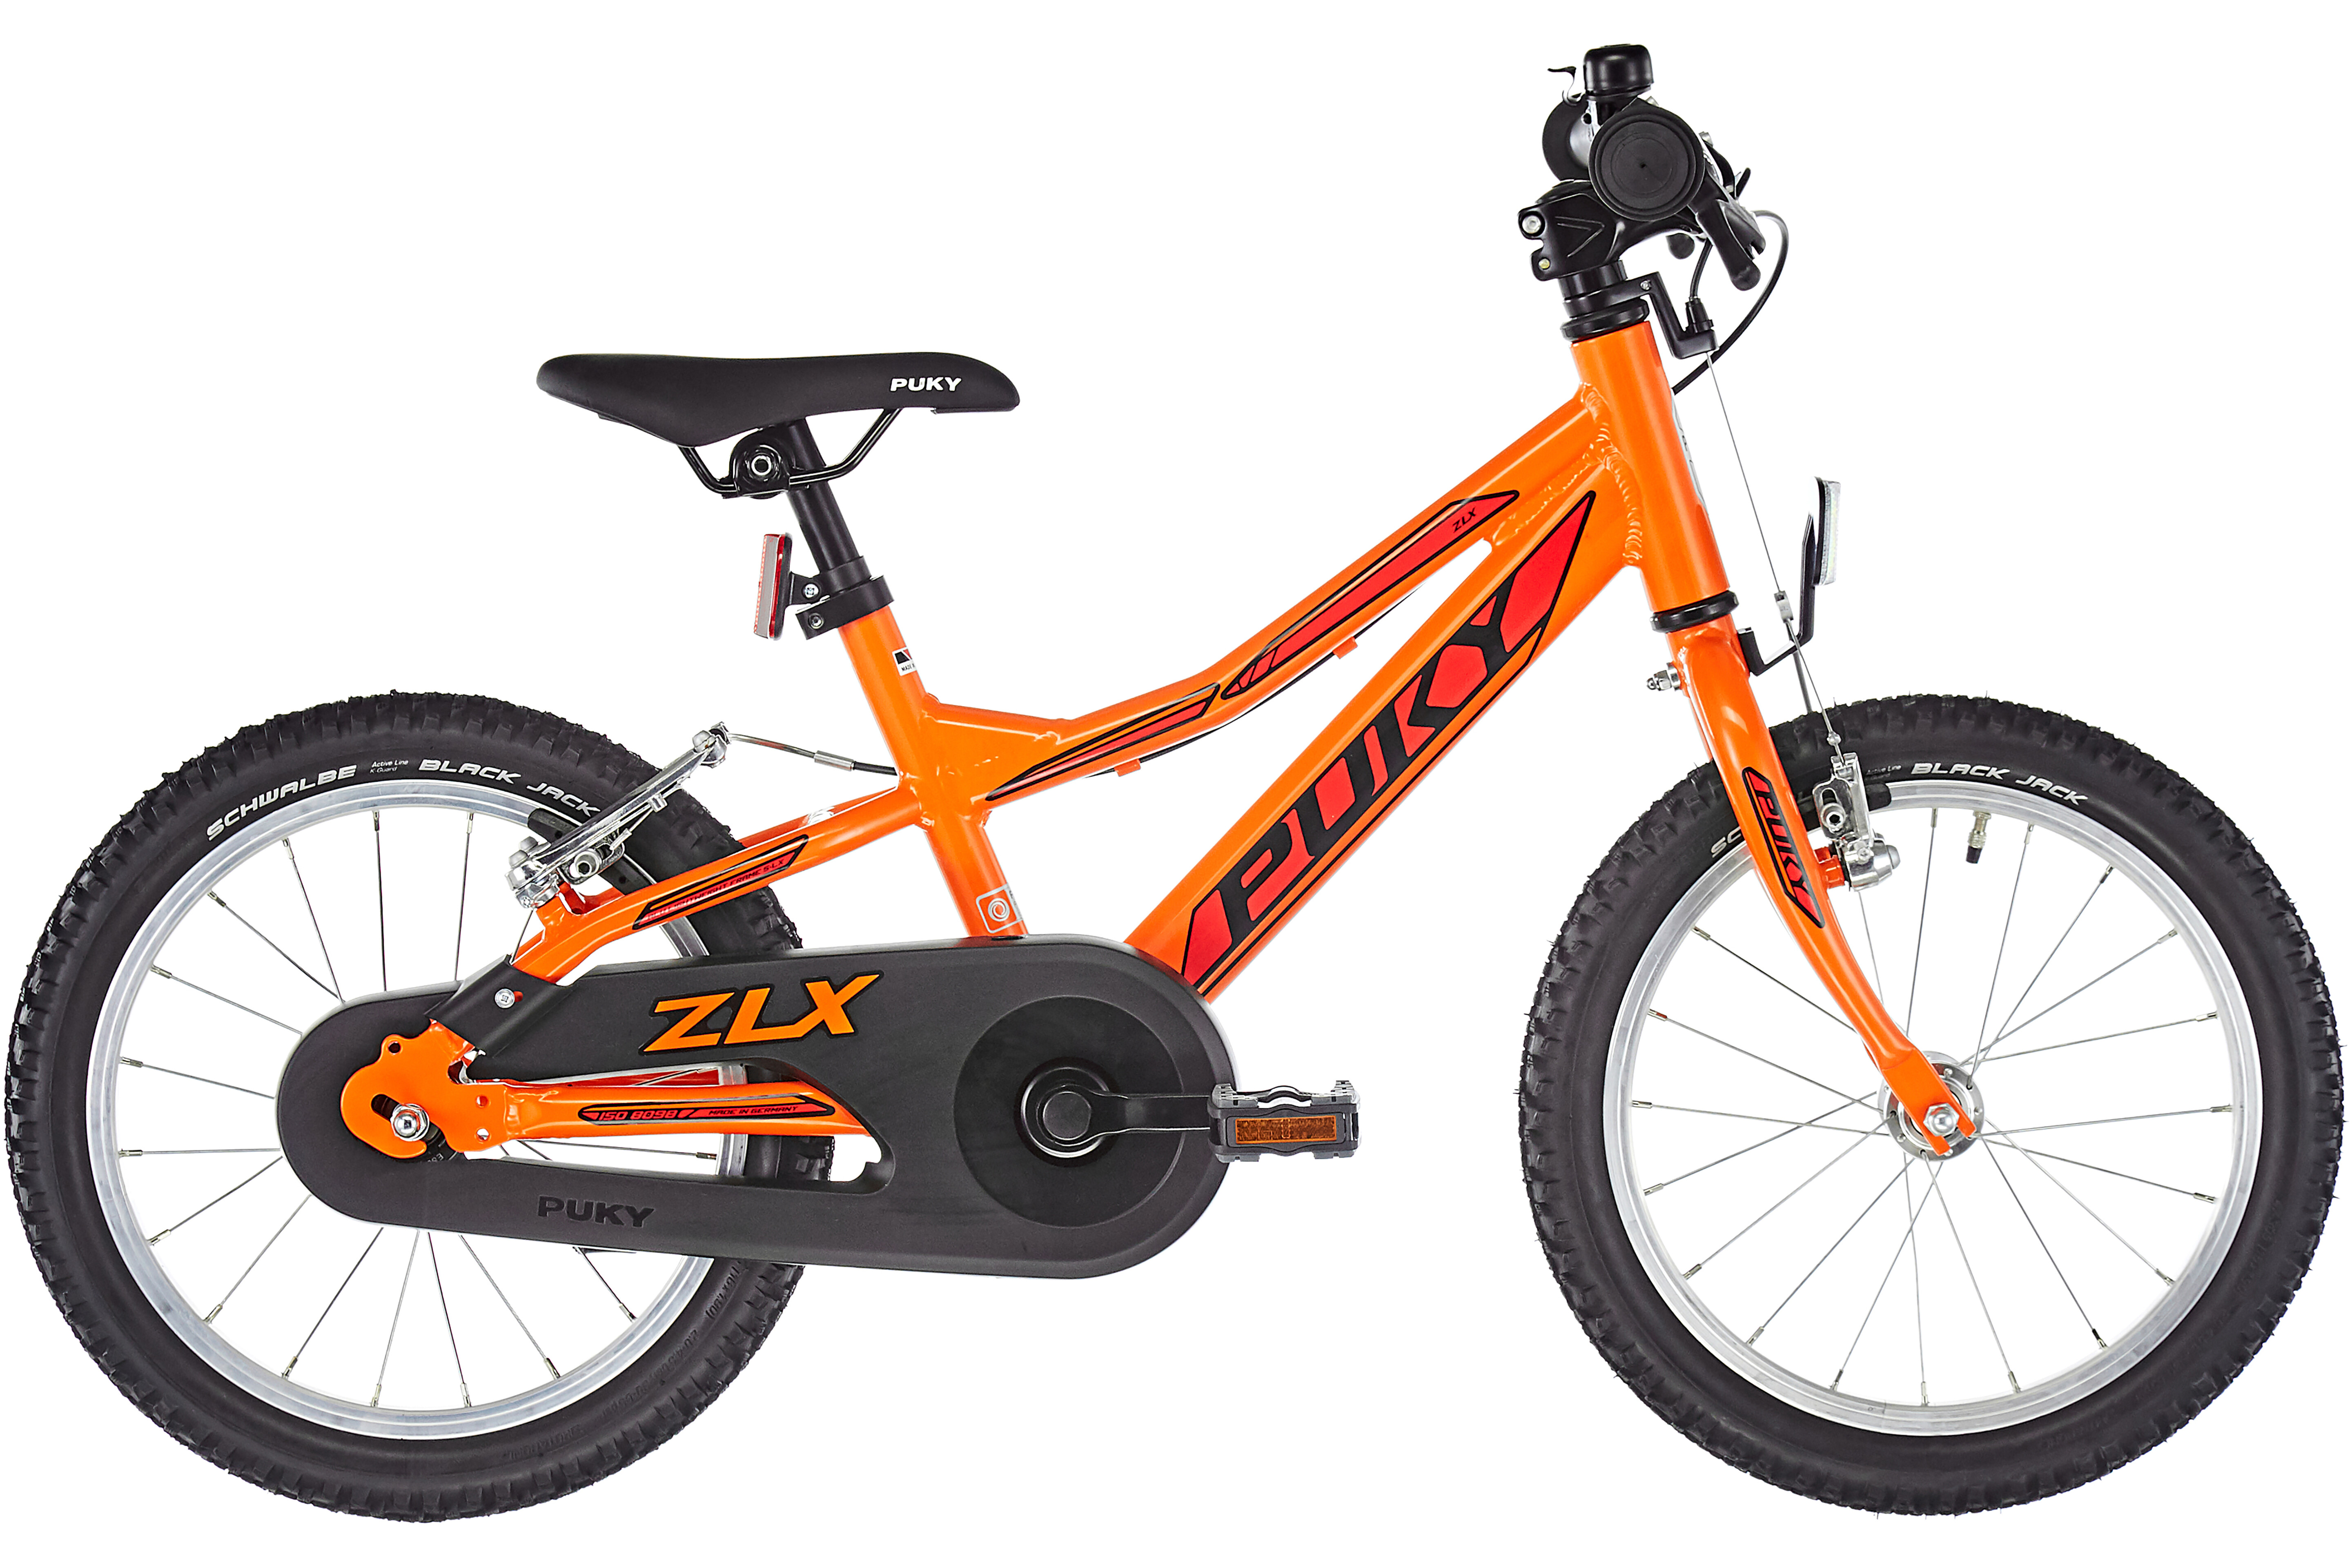 Puky ZLX 161 Alu F Fahrrad 16 Kinder racing orange